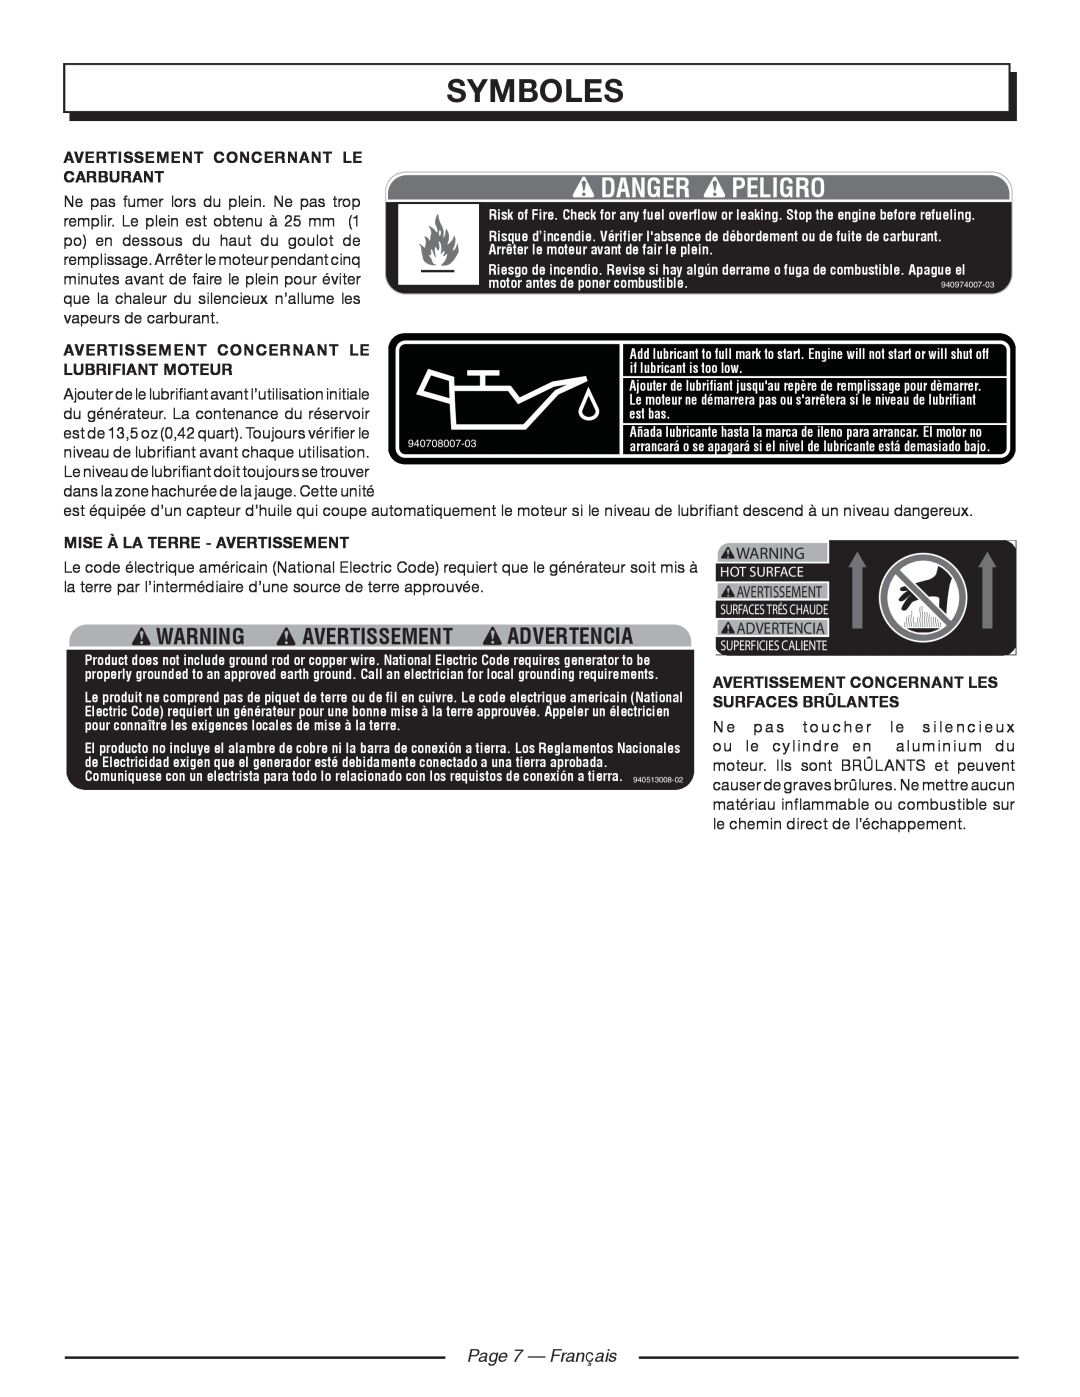 Homelite HGCA1400 manuel dutilisation Symboles, Danger Peligro, Warning Avertissement Advertencia, Page 7 - Français 